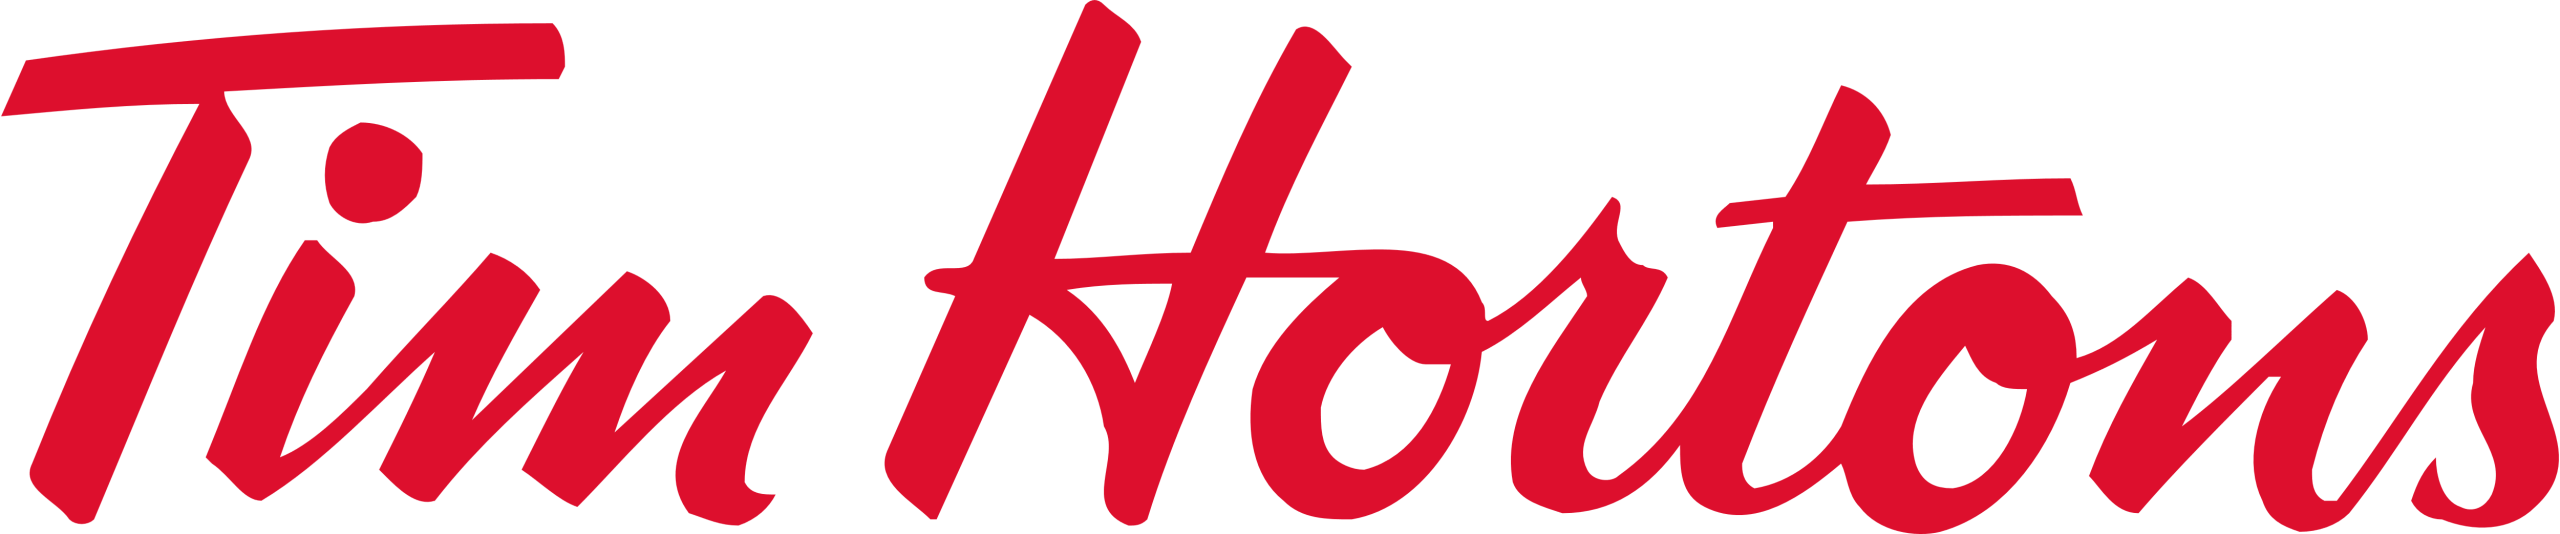 Logotipo de Tim Hortons